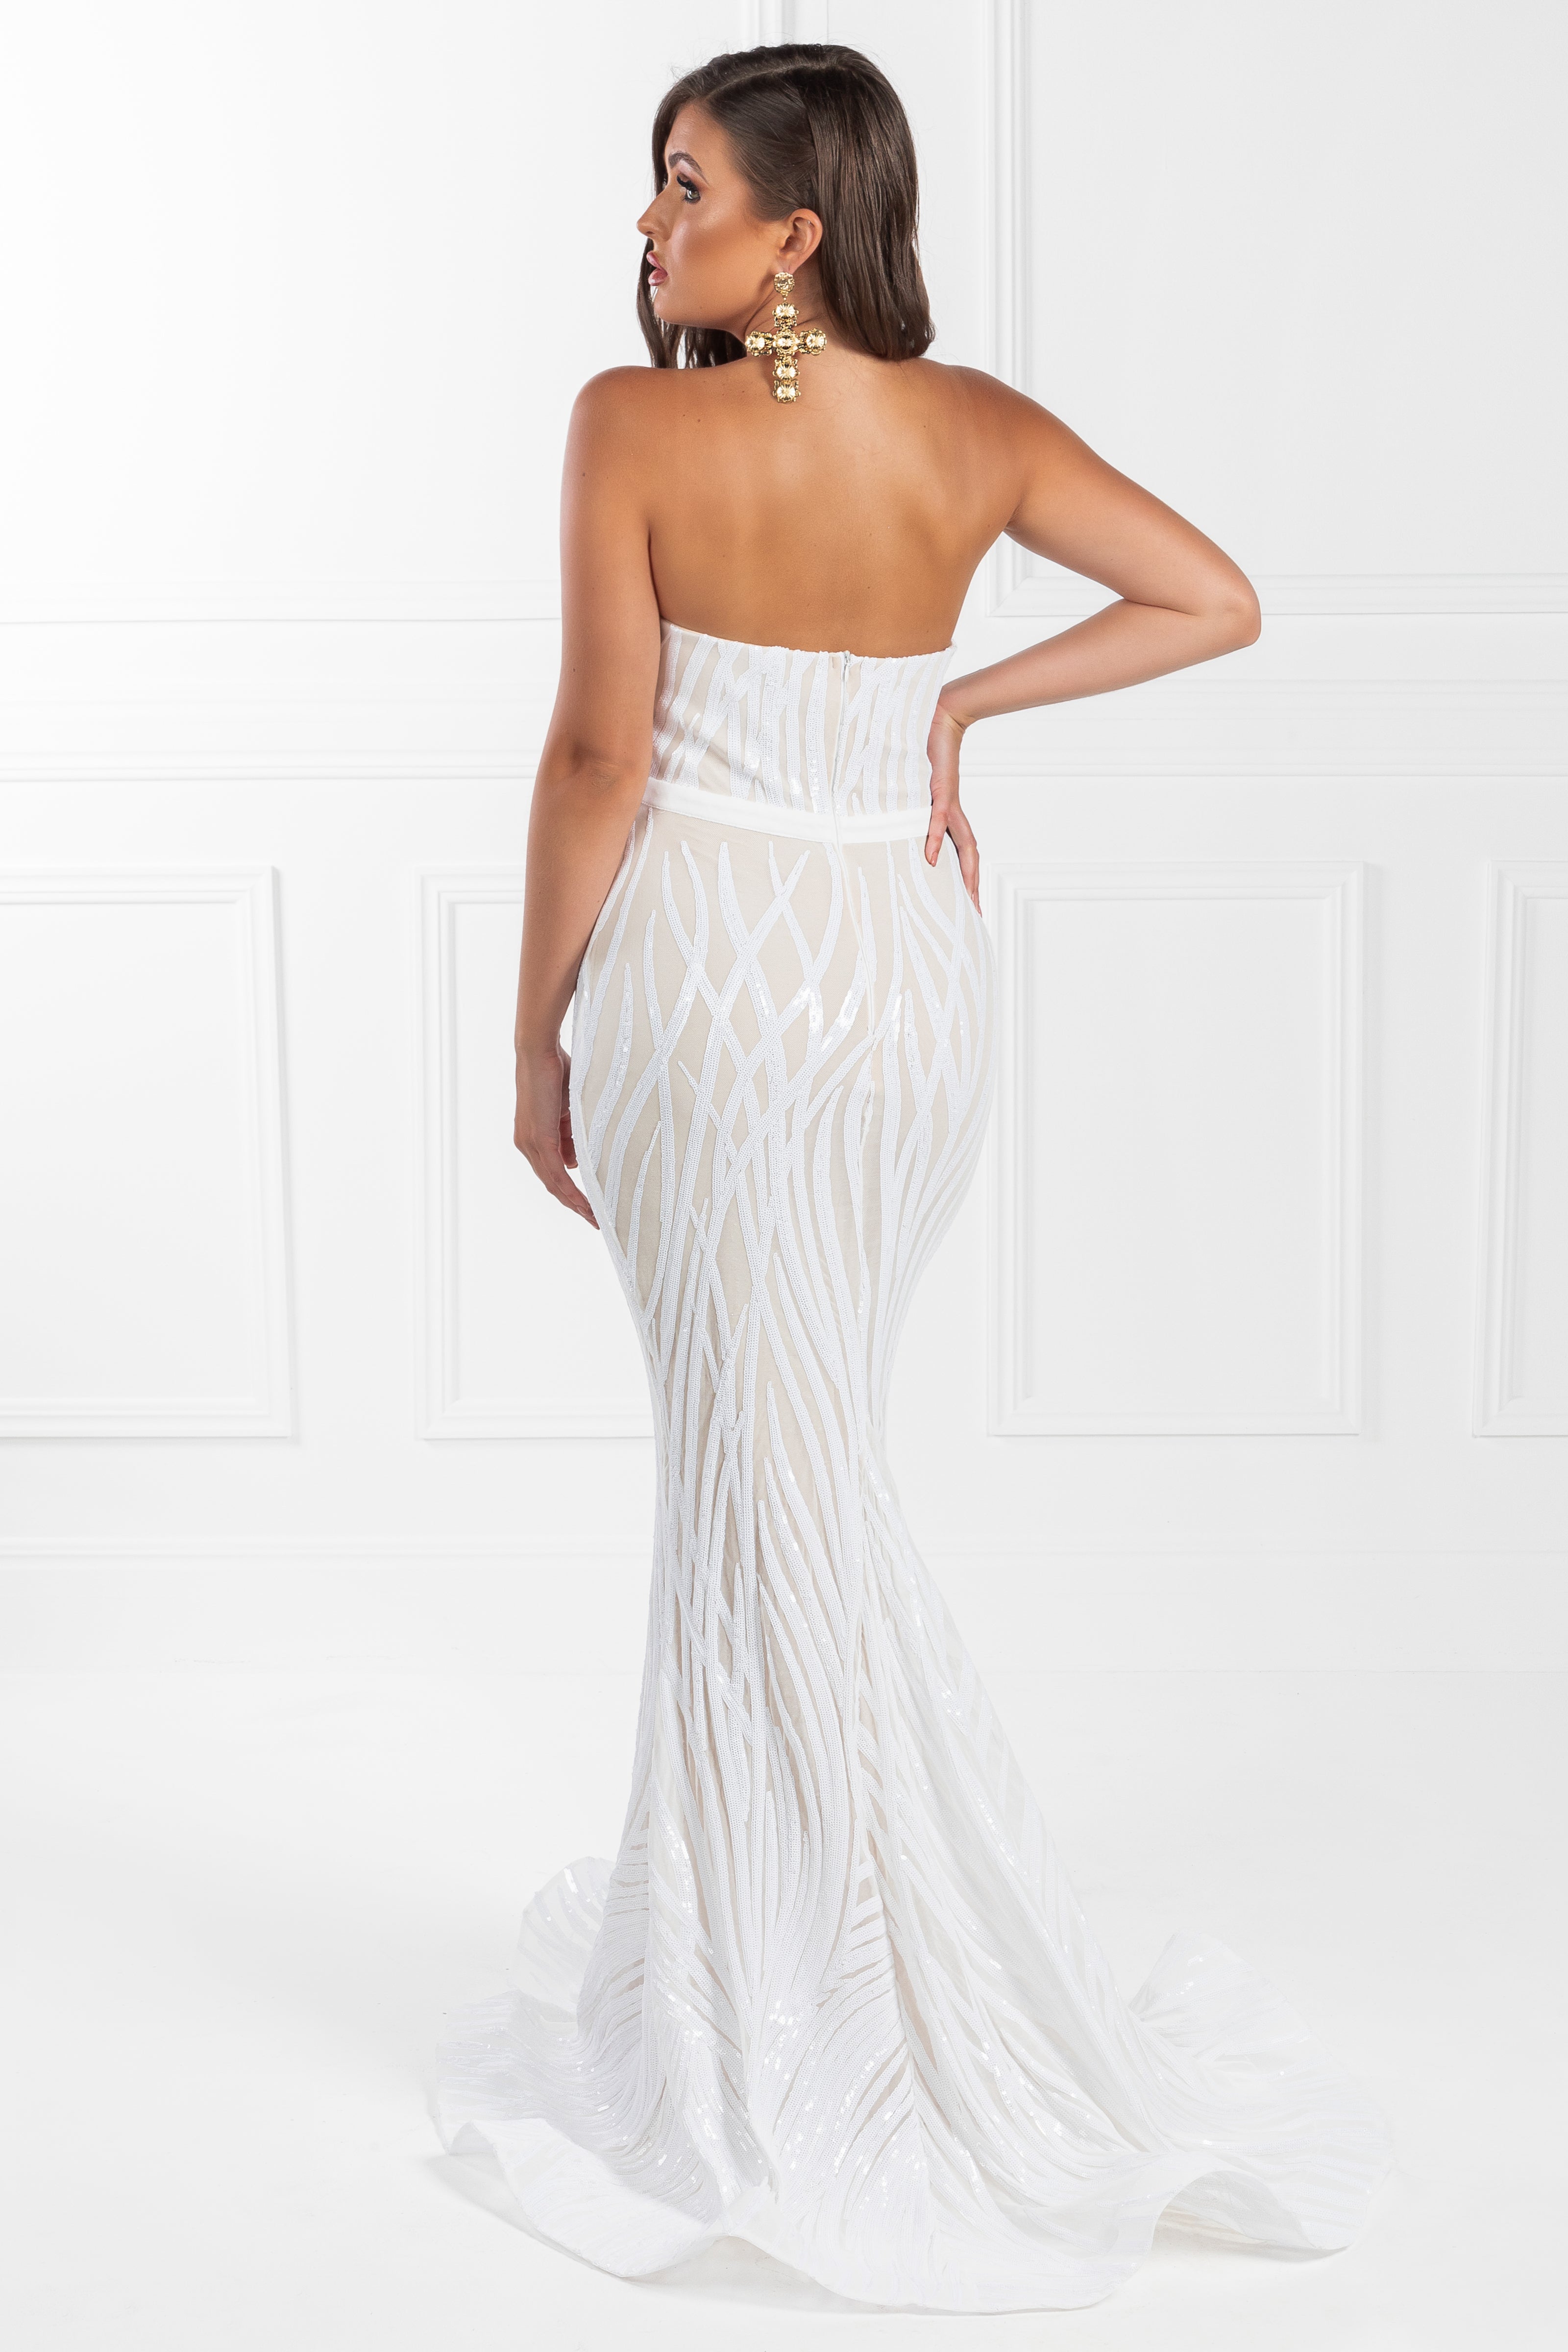 Honey Couture EVITA White Nude Strapless Sequin Wedding Formal Dress